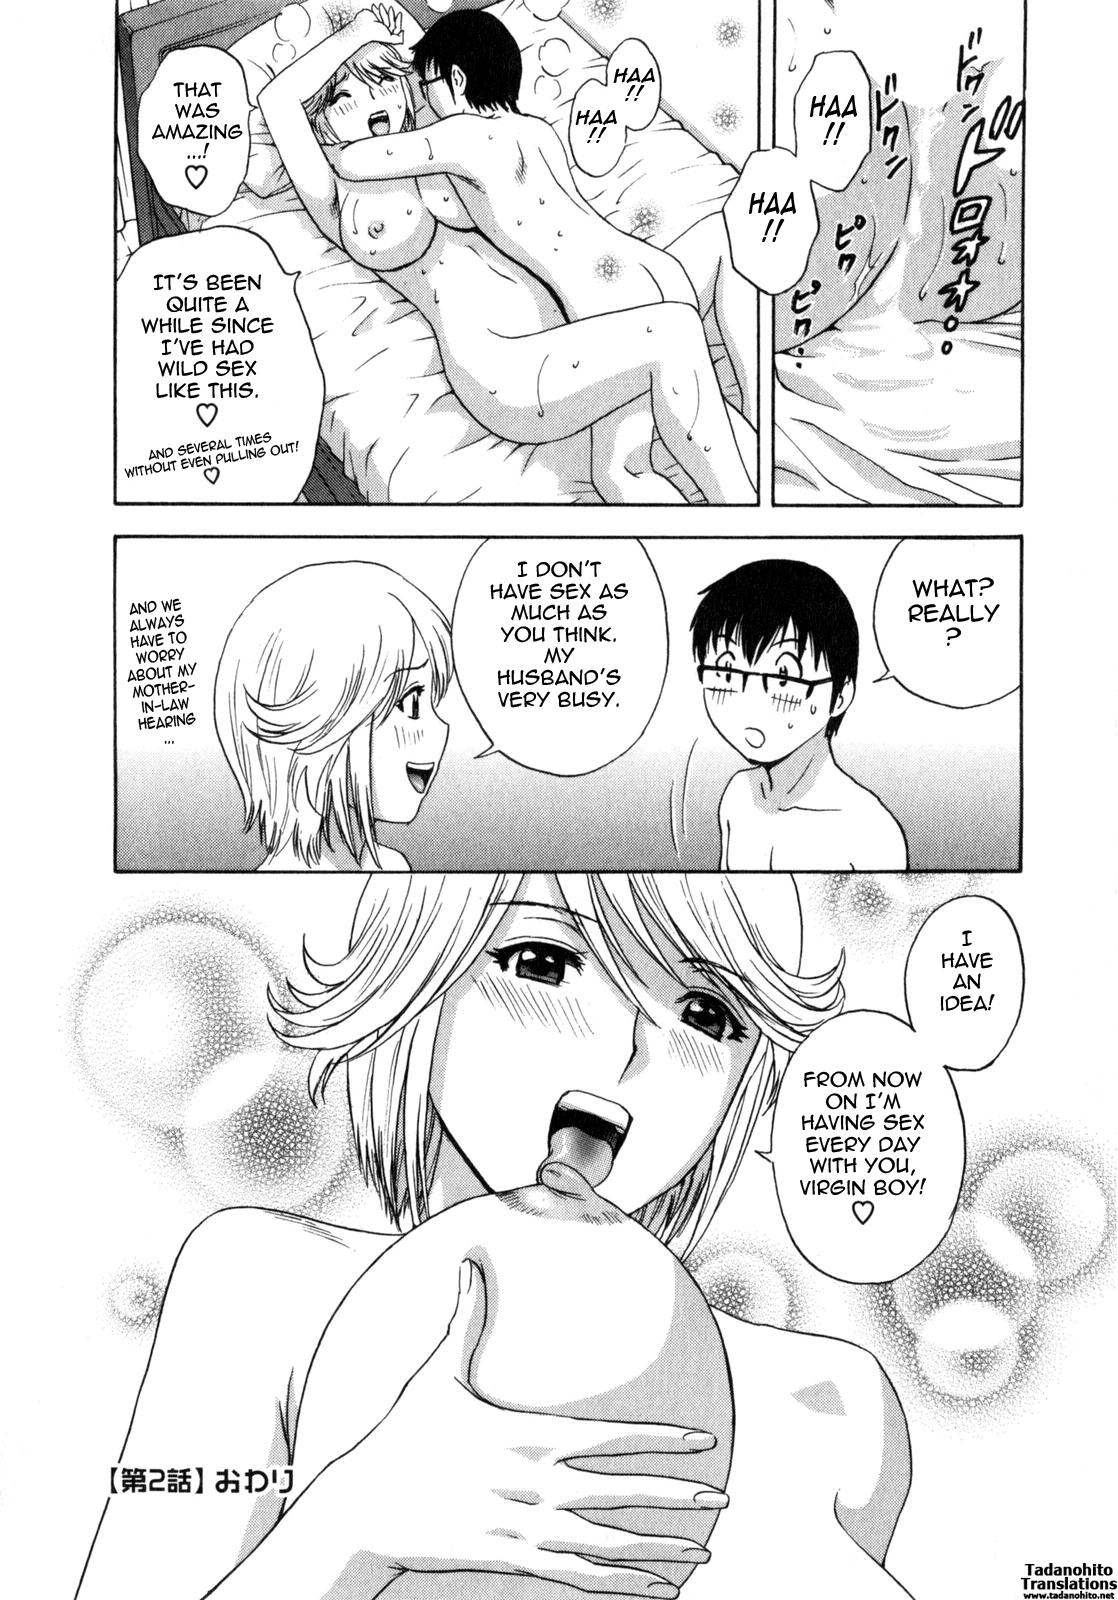 [Hidemaru] Life with Married Women Just Like a Manga 1 - Ch. 1-9 [English] {Tadanohito} 43